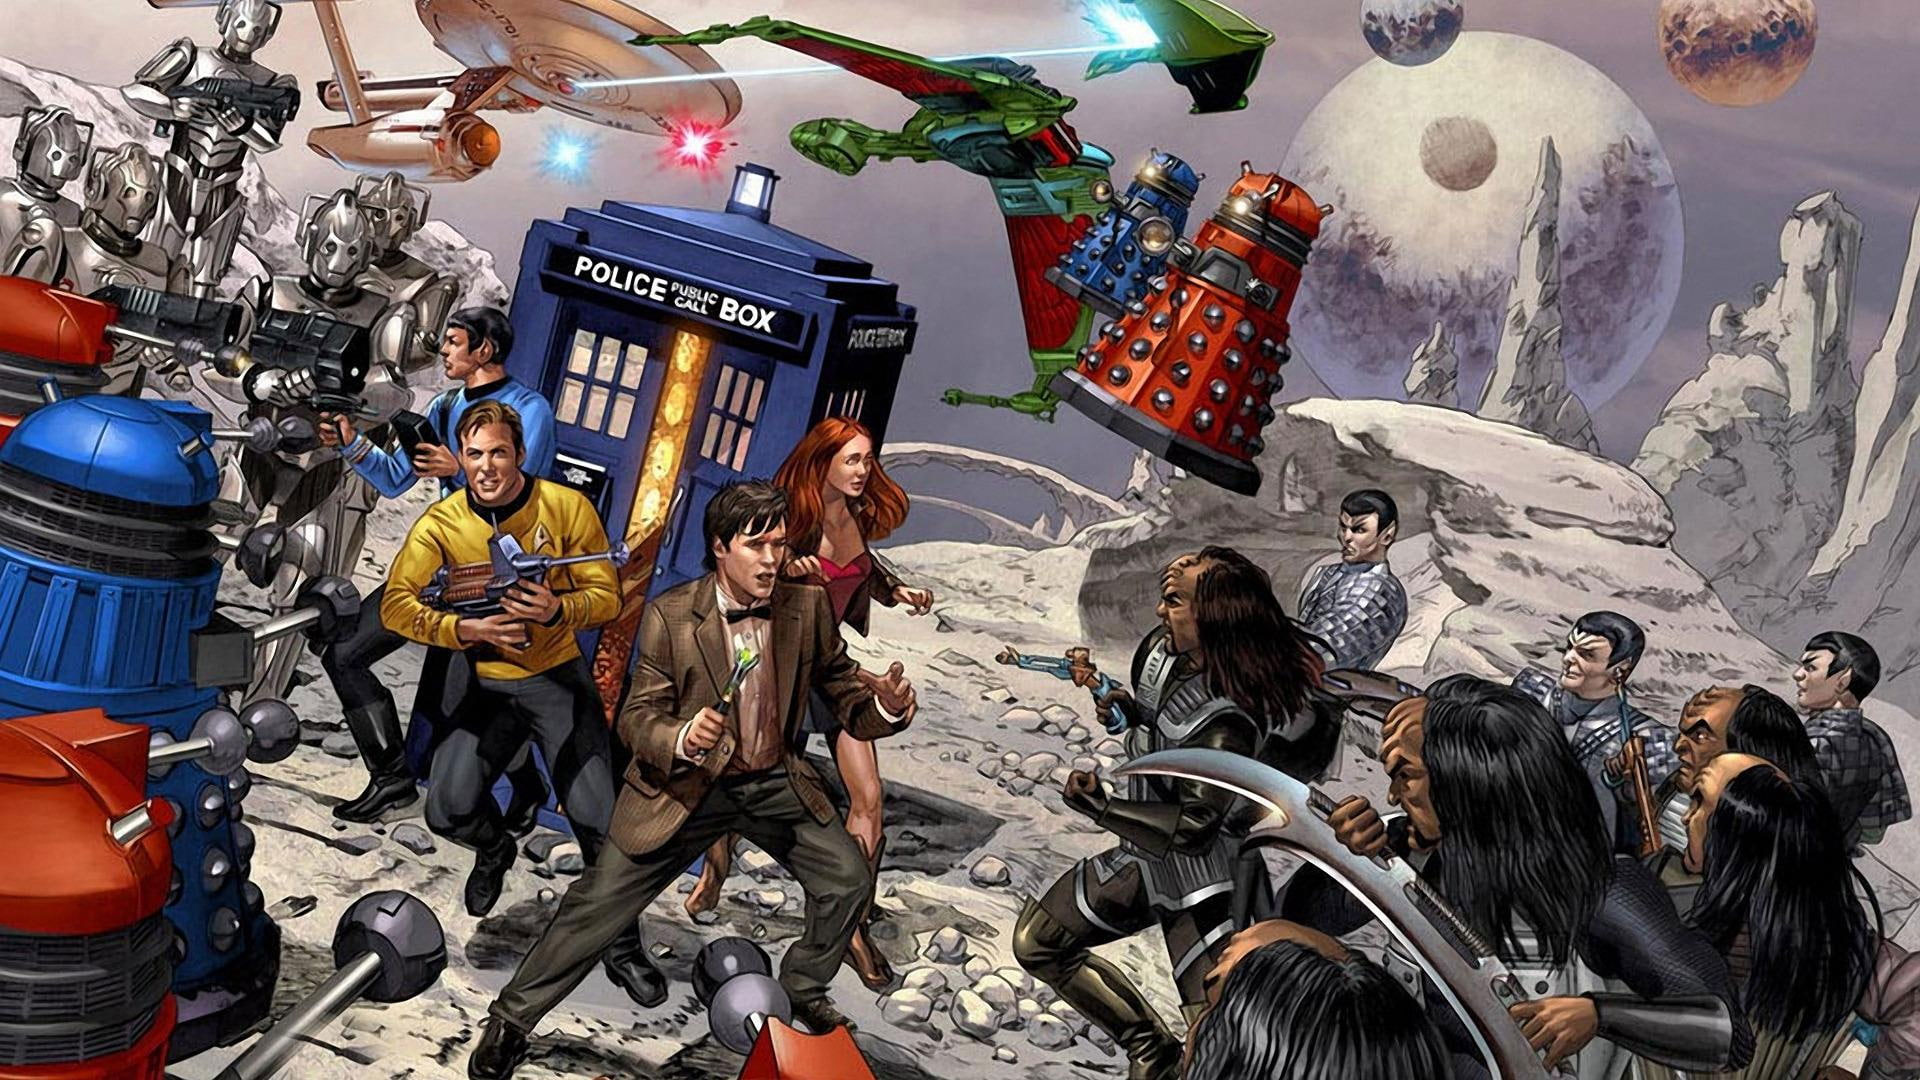 Wallpaper Doctor Who Star Trek Crossover, Star Trek